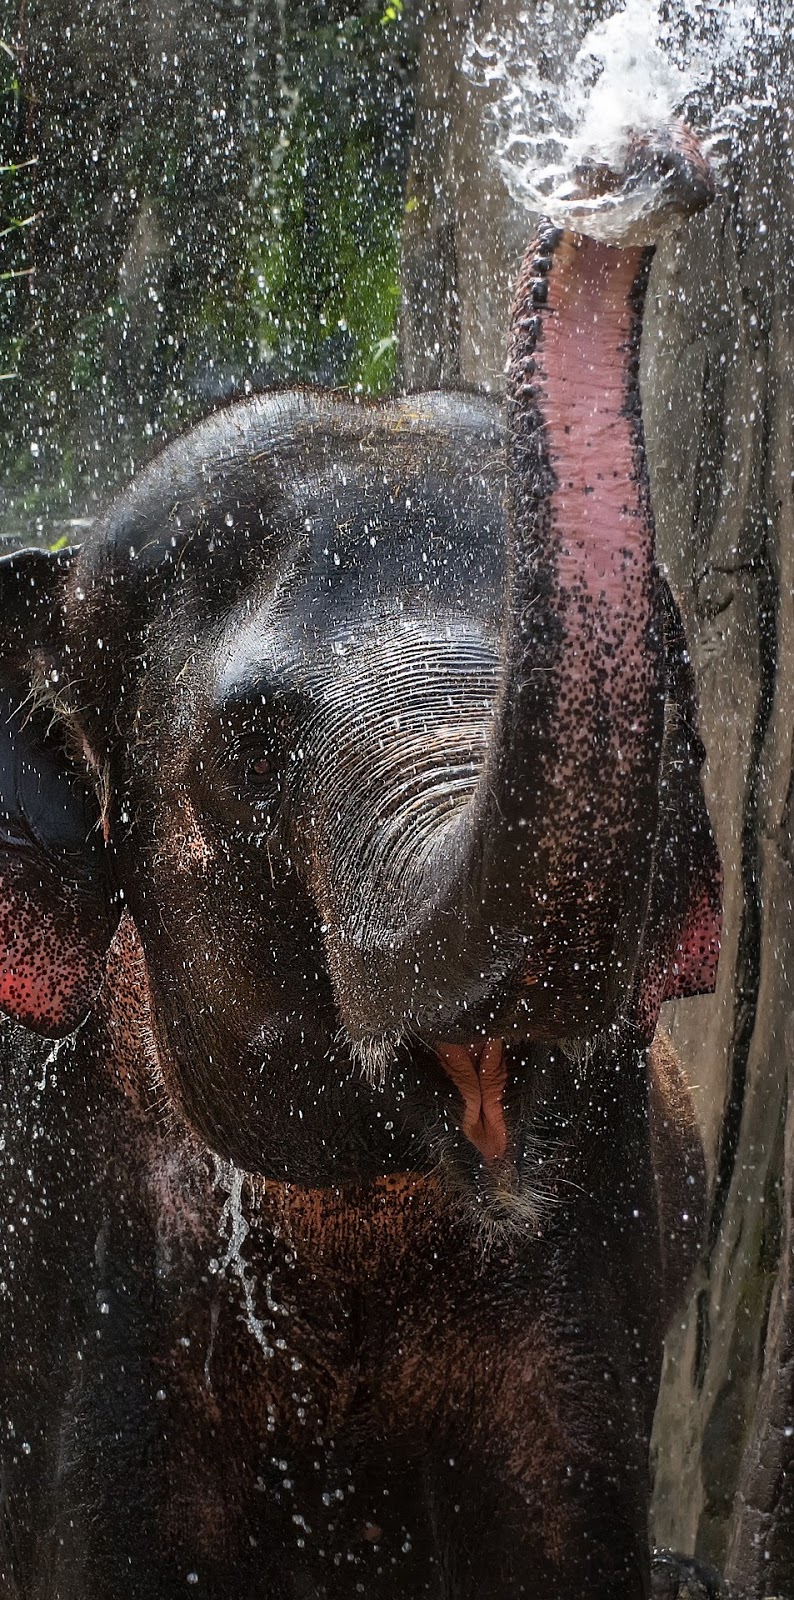 Elephant water splash.